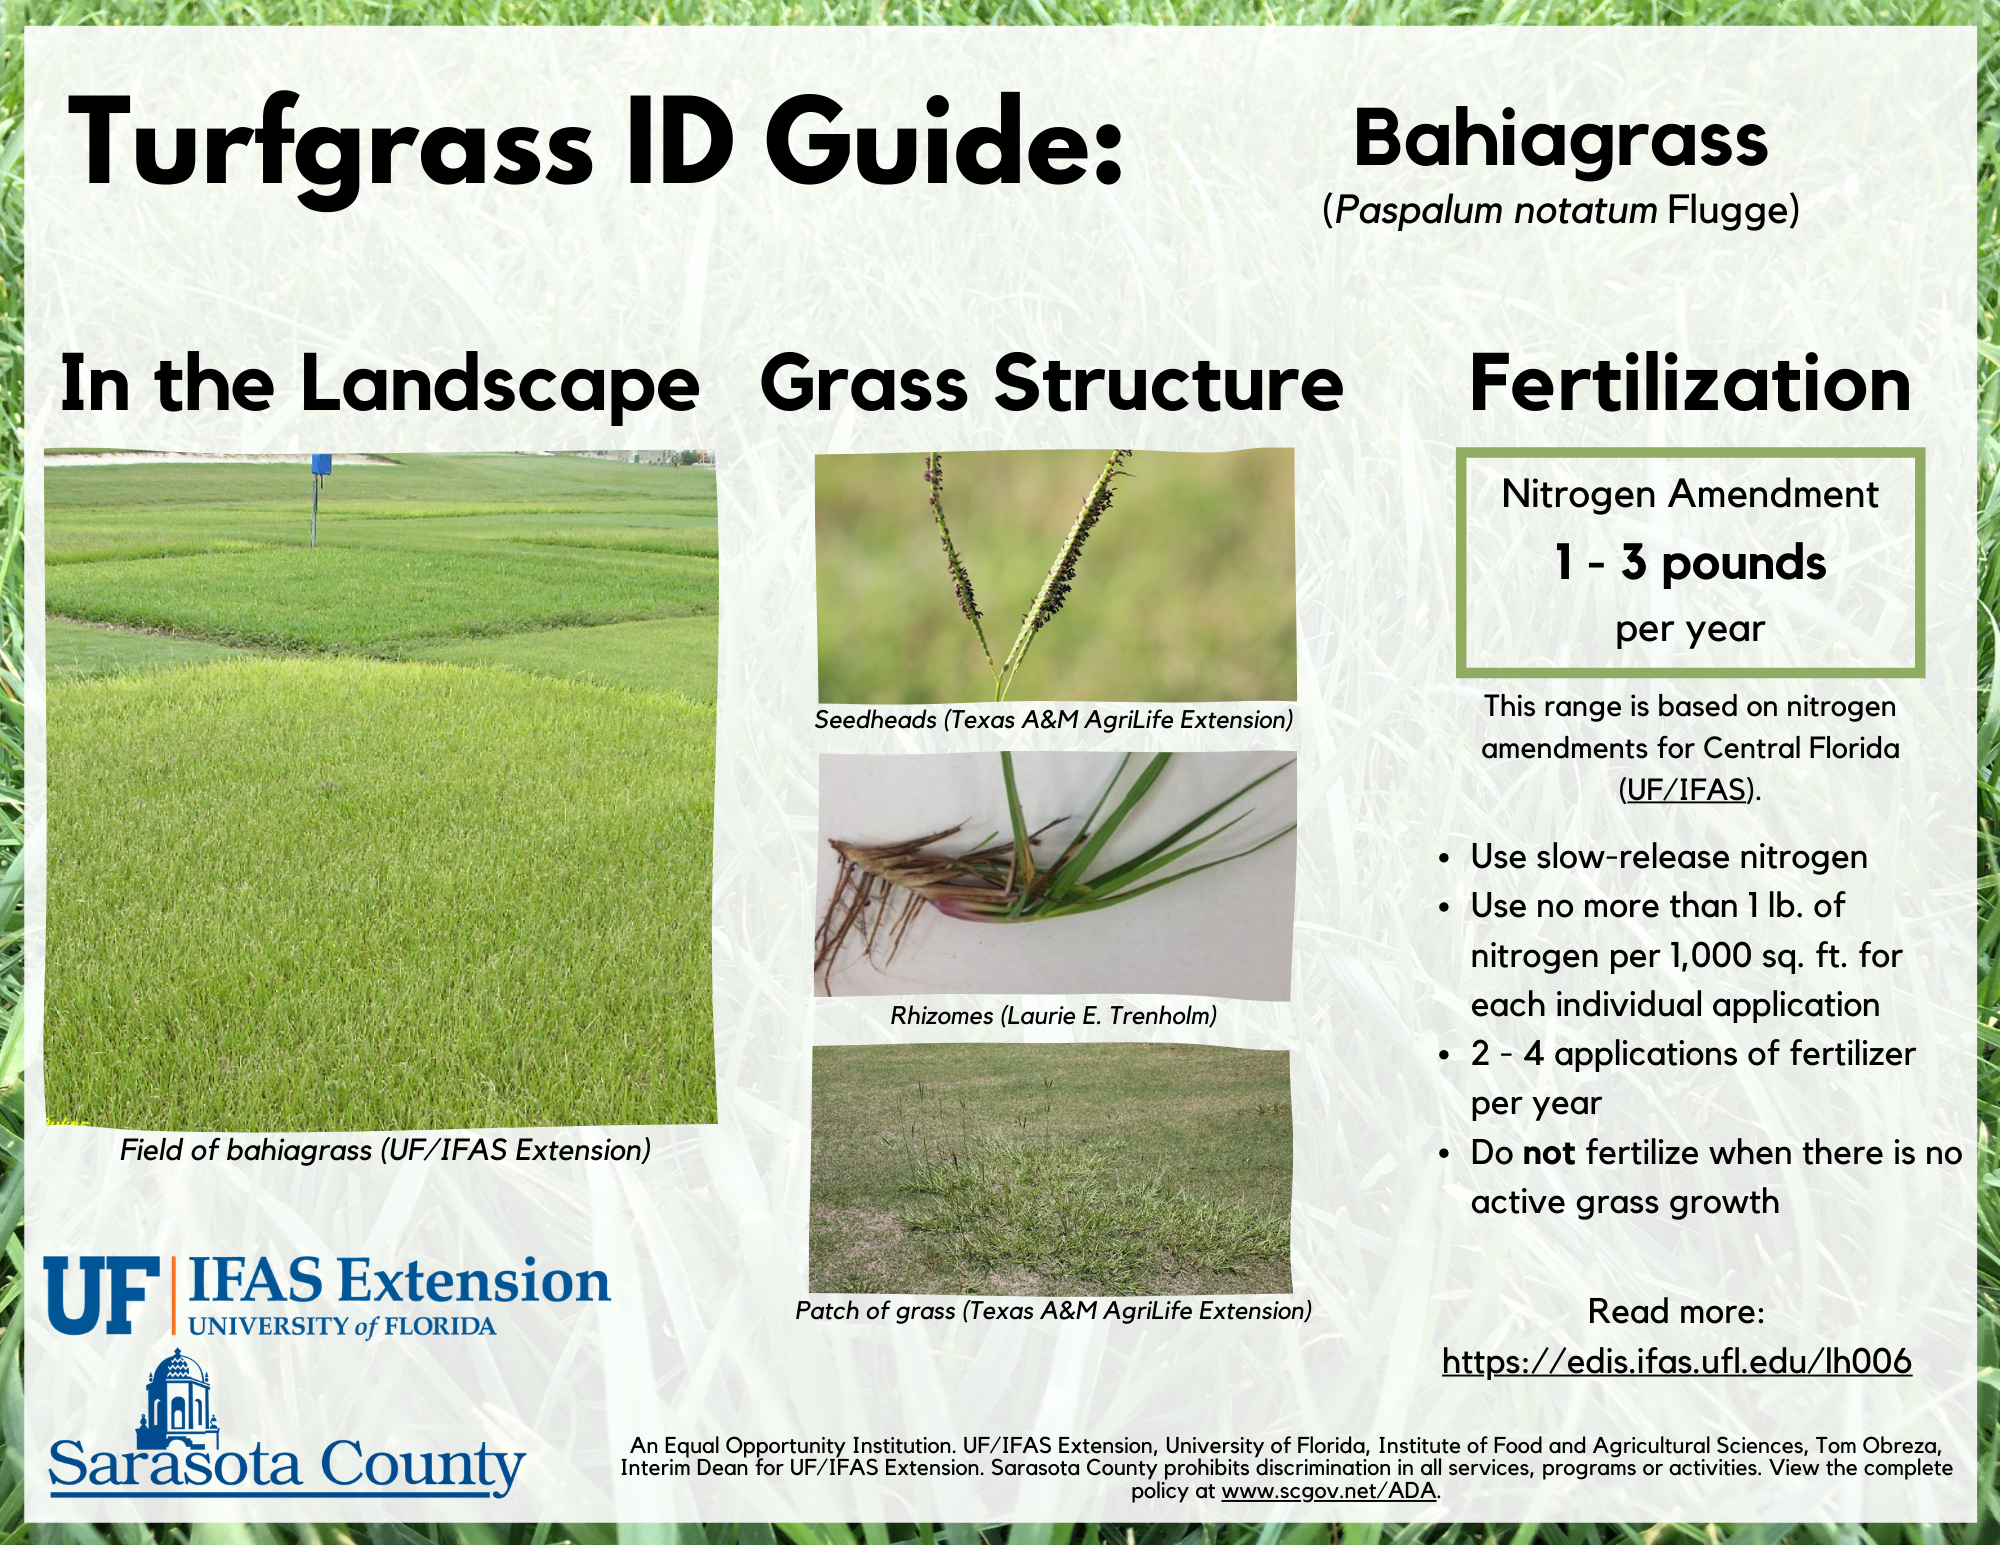 Guide to fertilizing Bahiagrass in Sarasota County